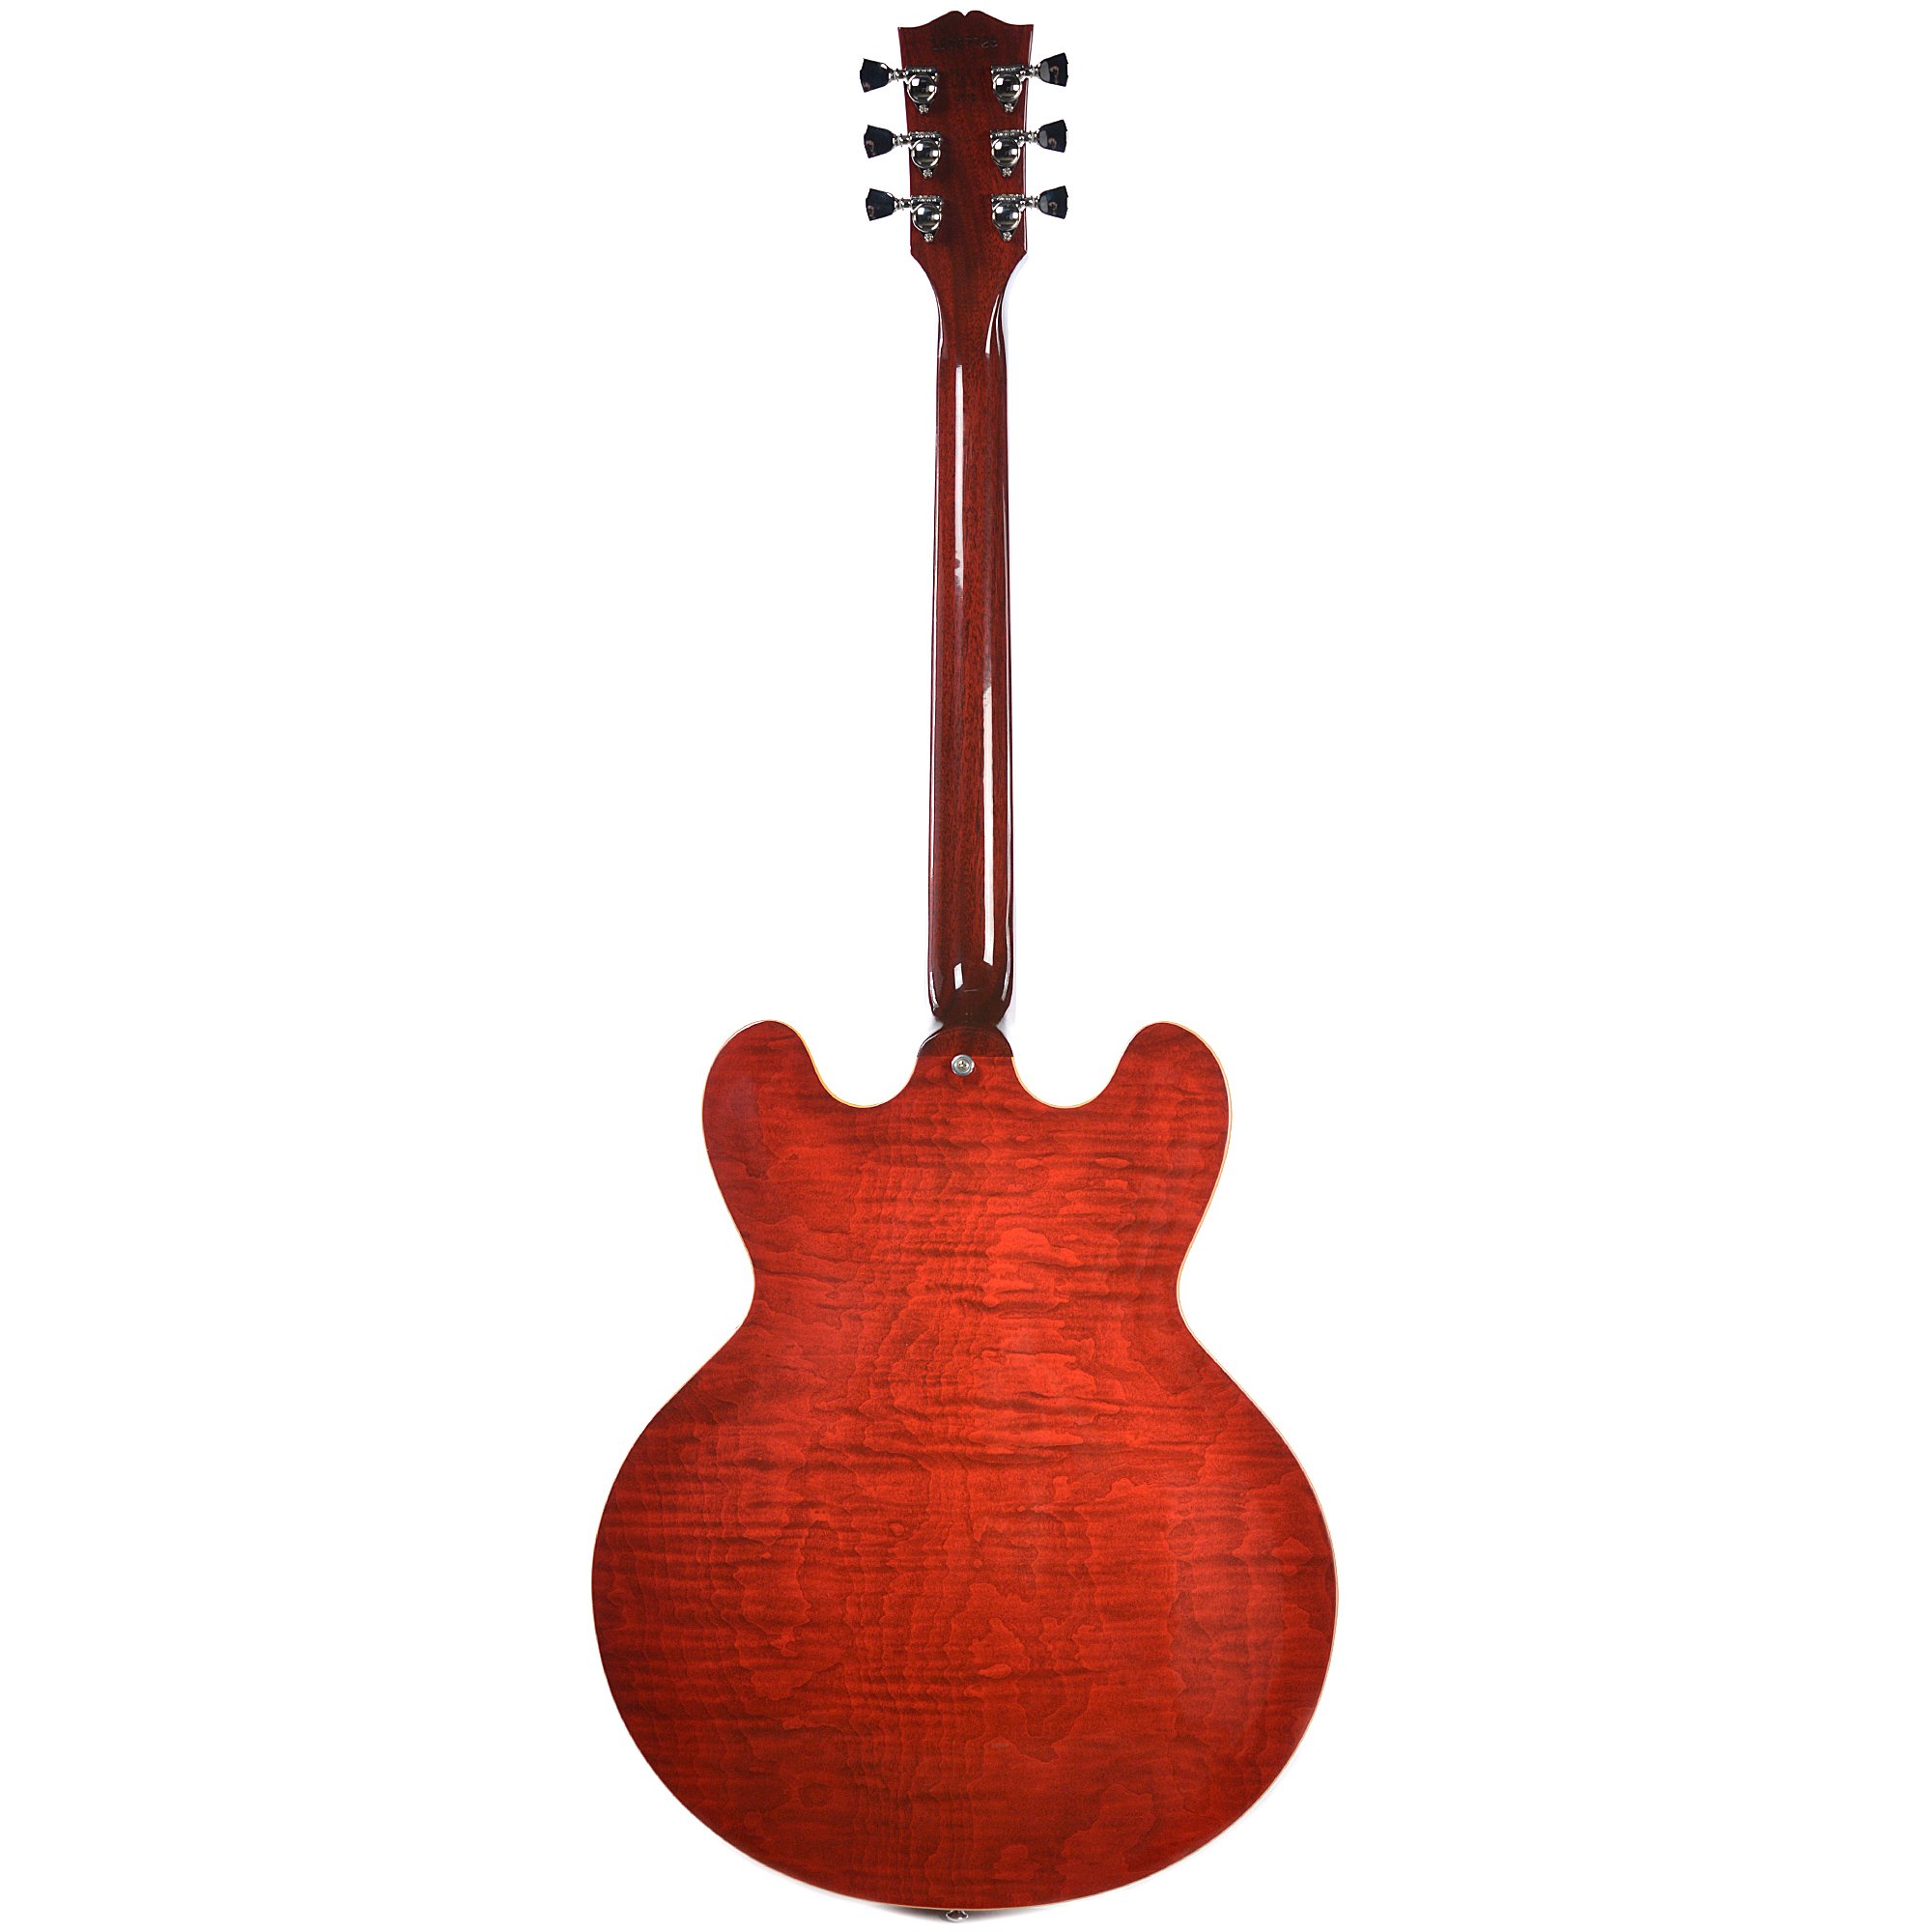 Gibson Es-335 Figured 2018 Ltd - Antique Sixties Cherry - Semi hollow elektriche gitaar - Variation 1